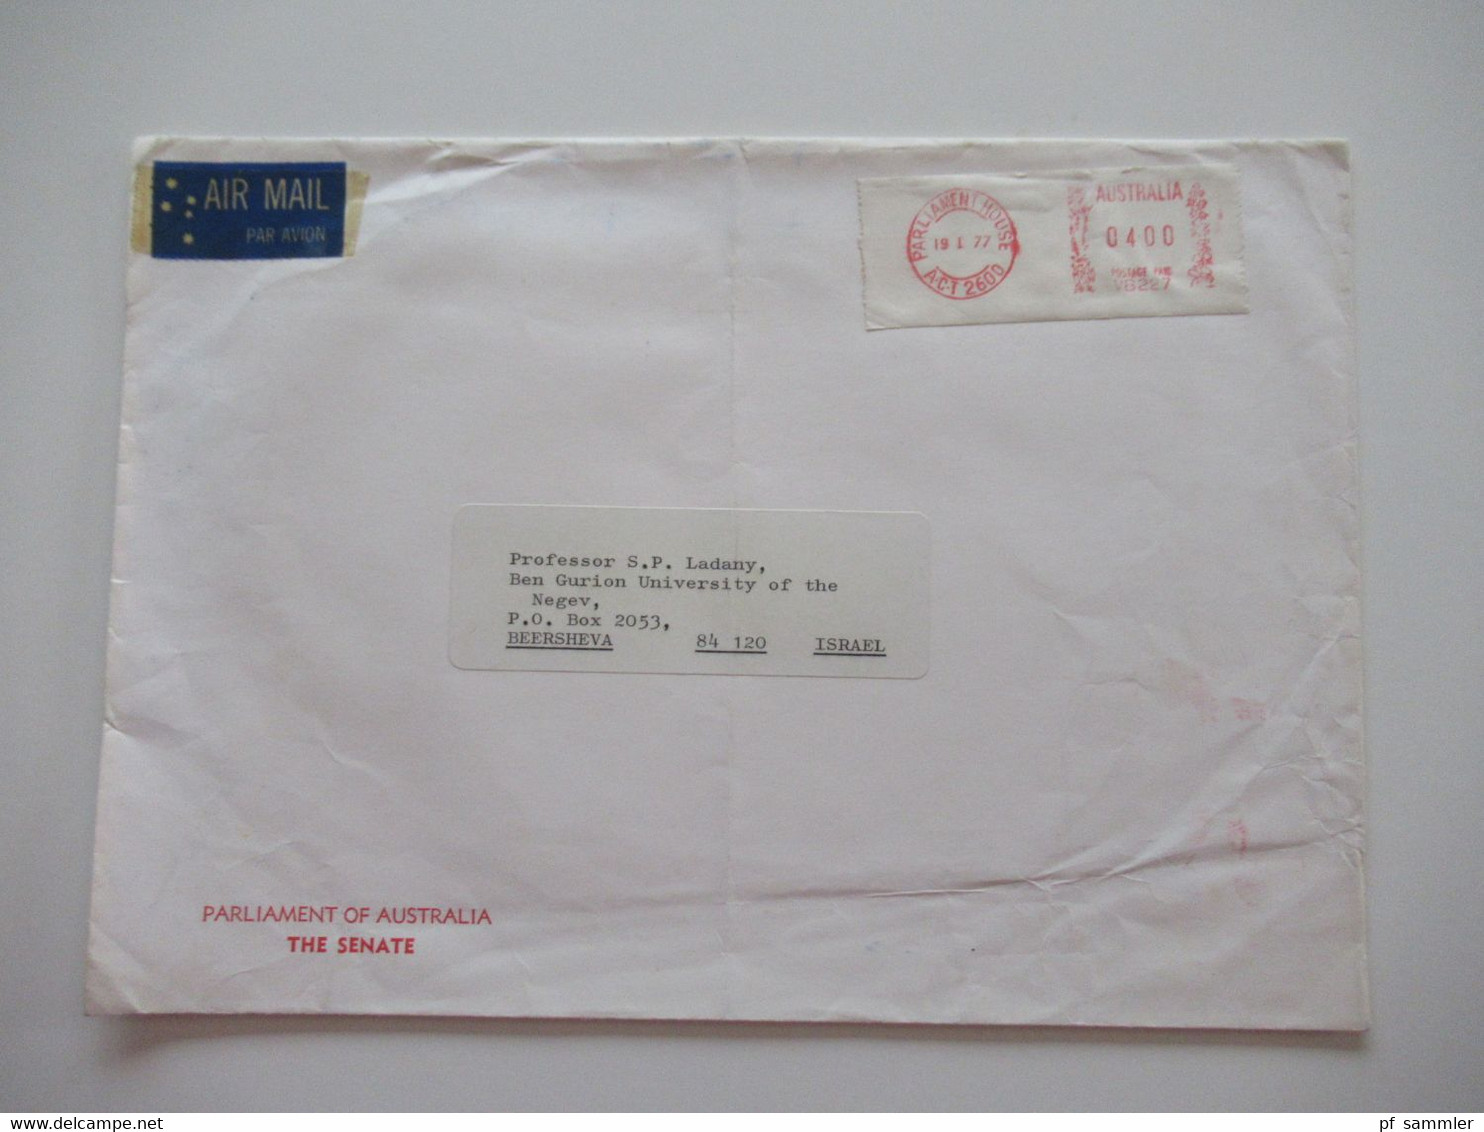 Australien 1977 Air Mail Nach Israel Umschlag Parliament Of Australia The Senate Postage Paid Parliament House ACT 2600 - Brieven En Documenten